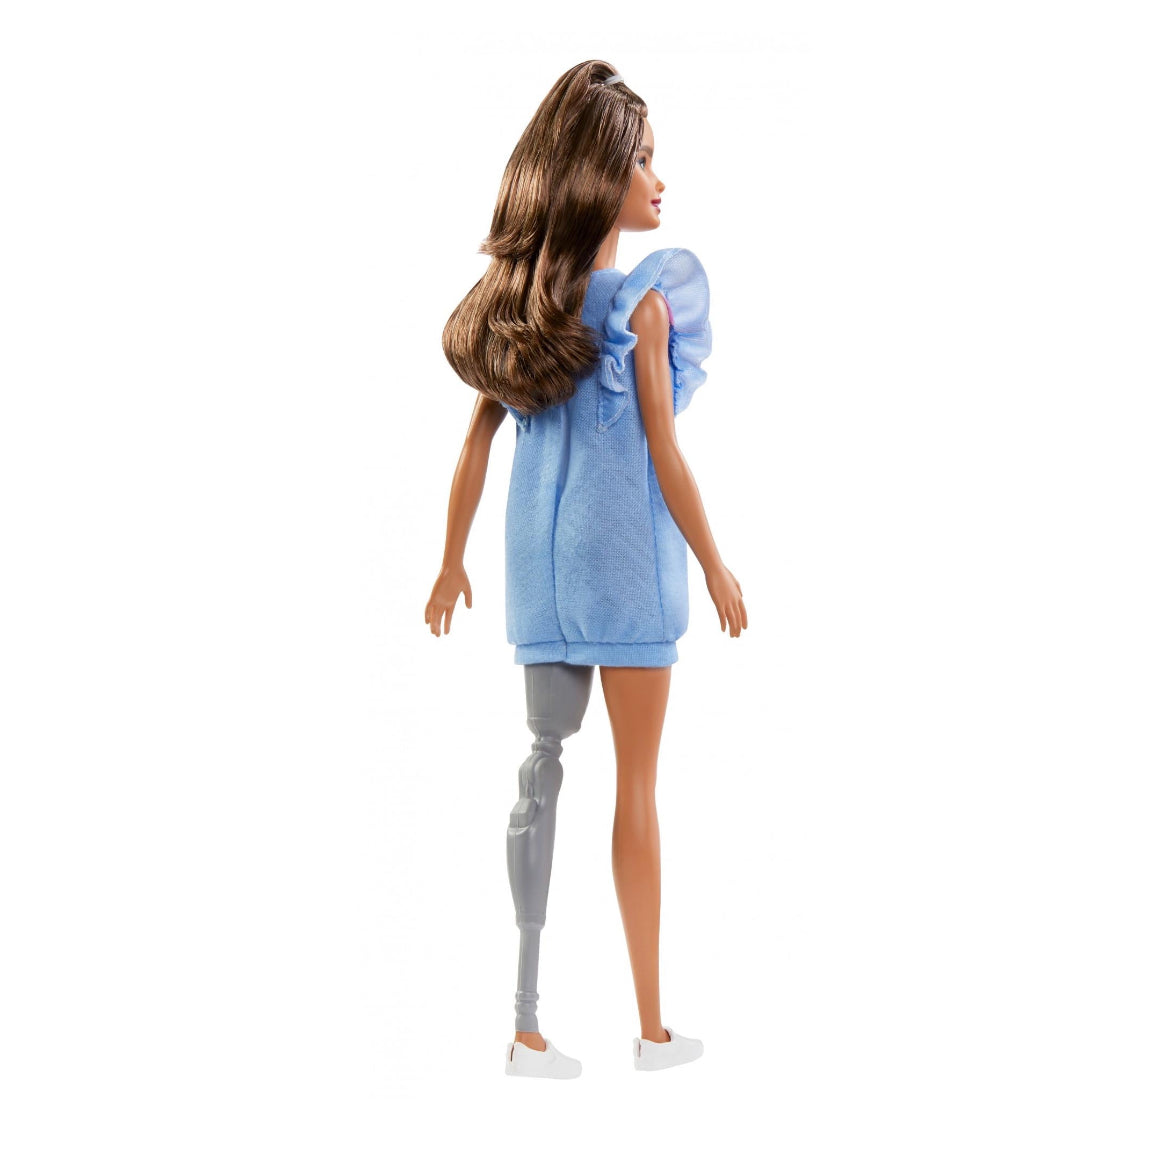 Barbie Fashionistas Doll #121 Brunette Hair with Prosthetic Leg